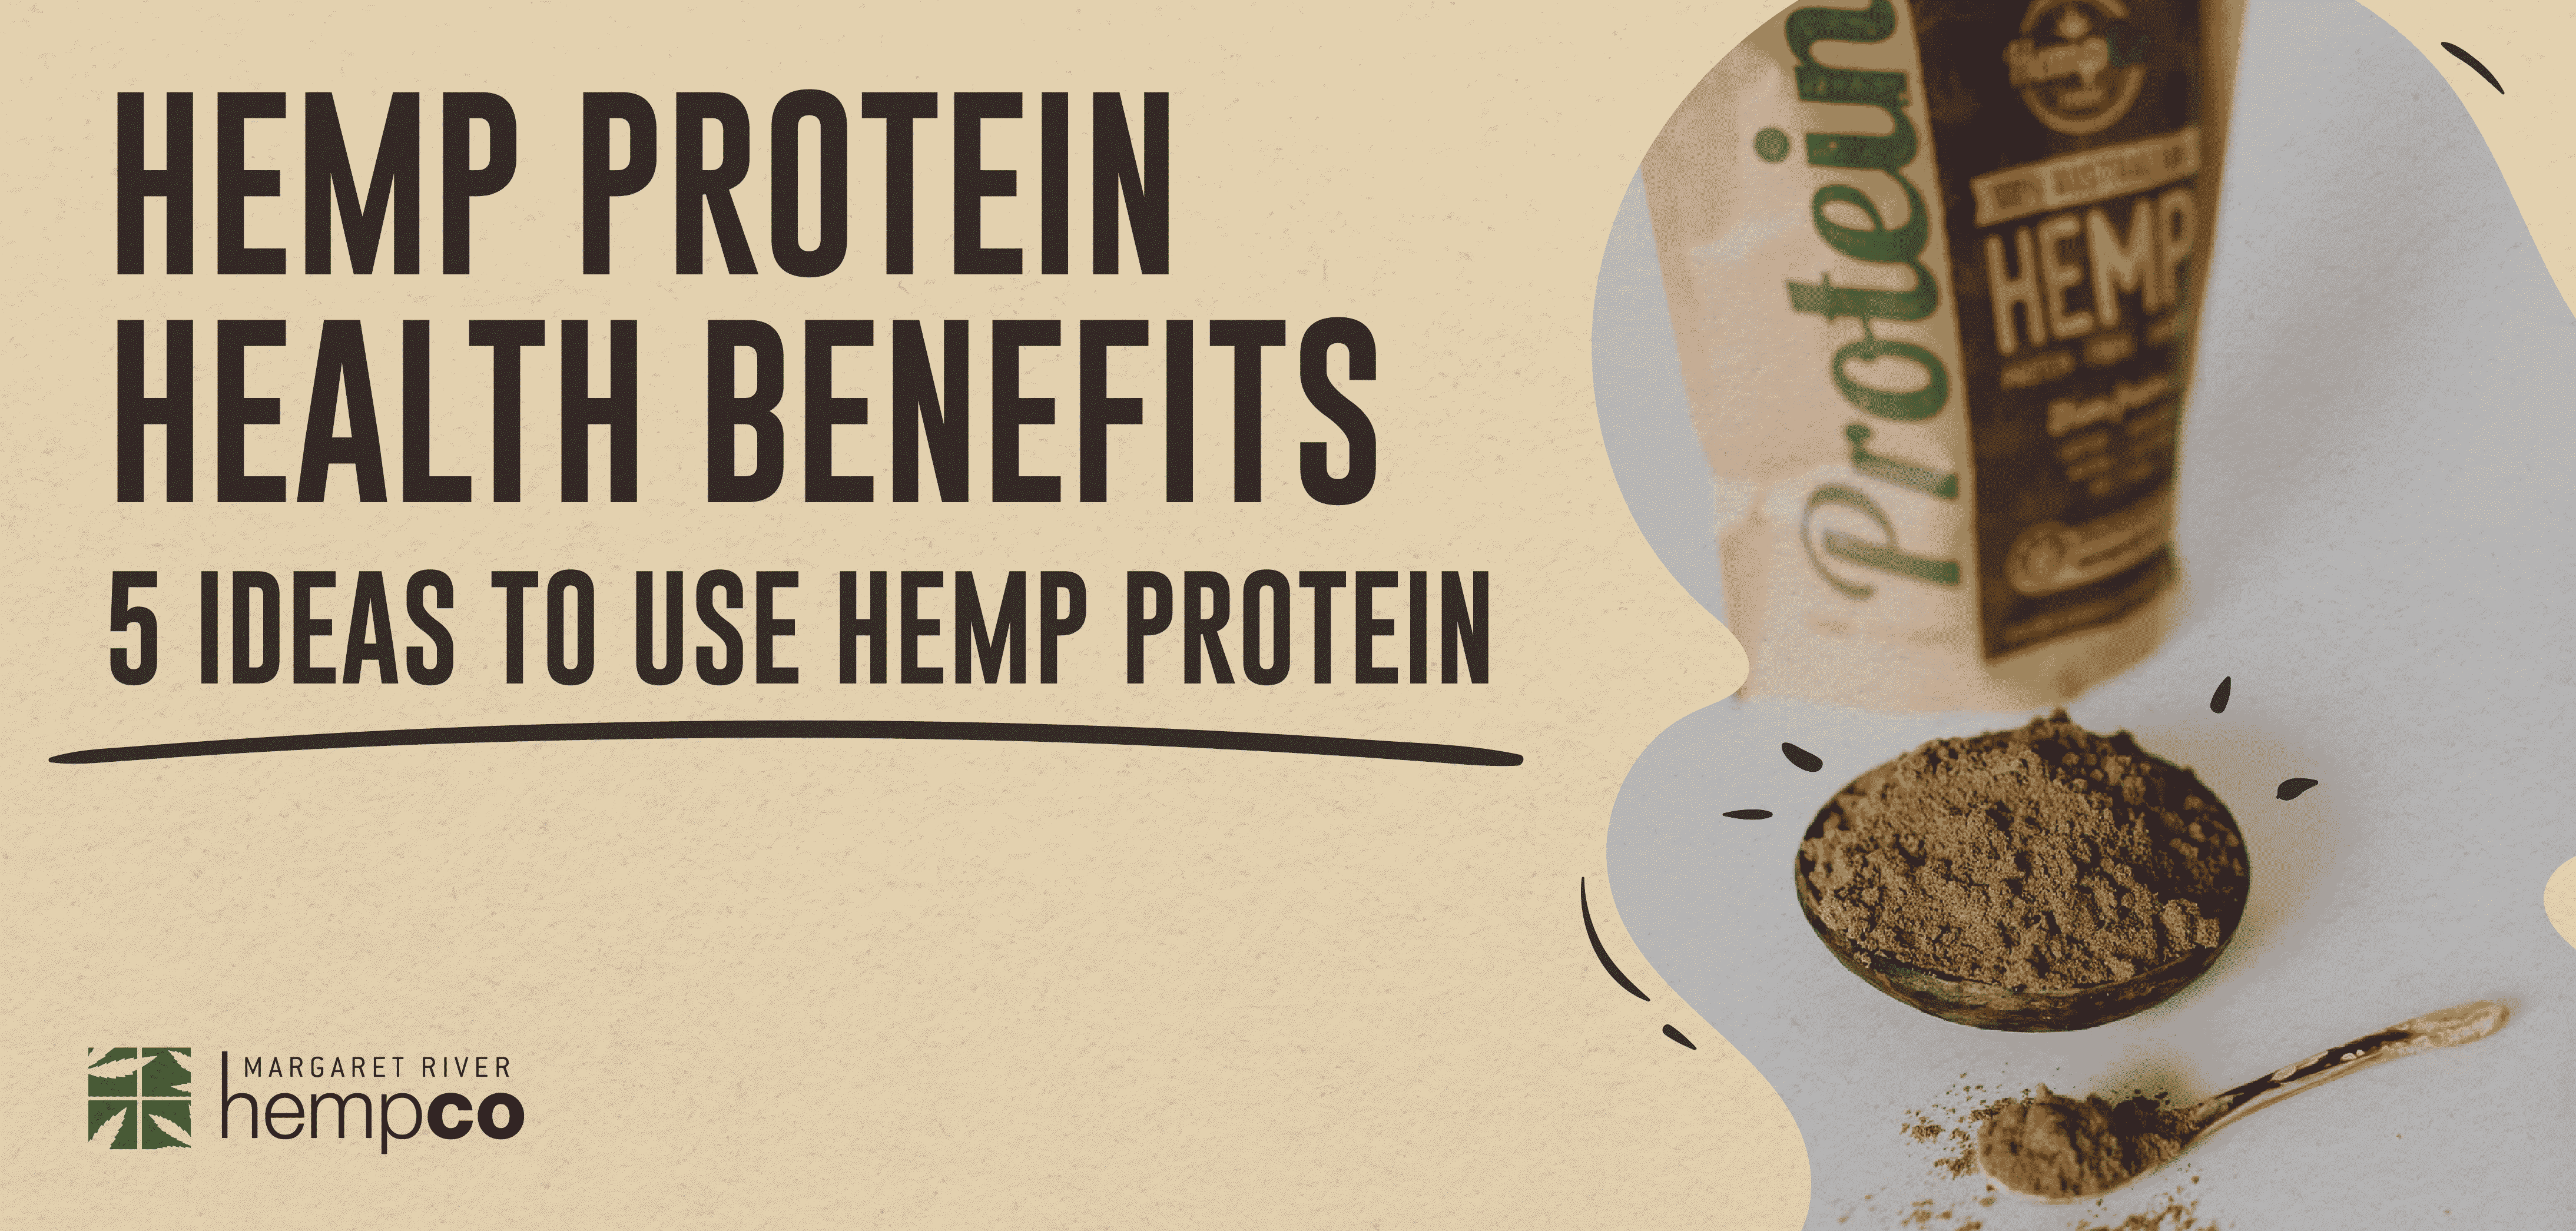 Hemp protein health benefits and recipes